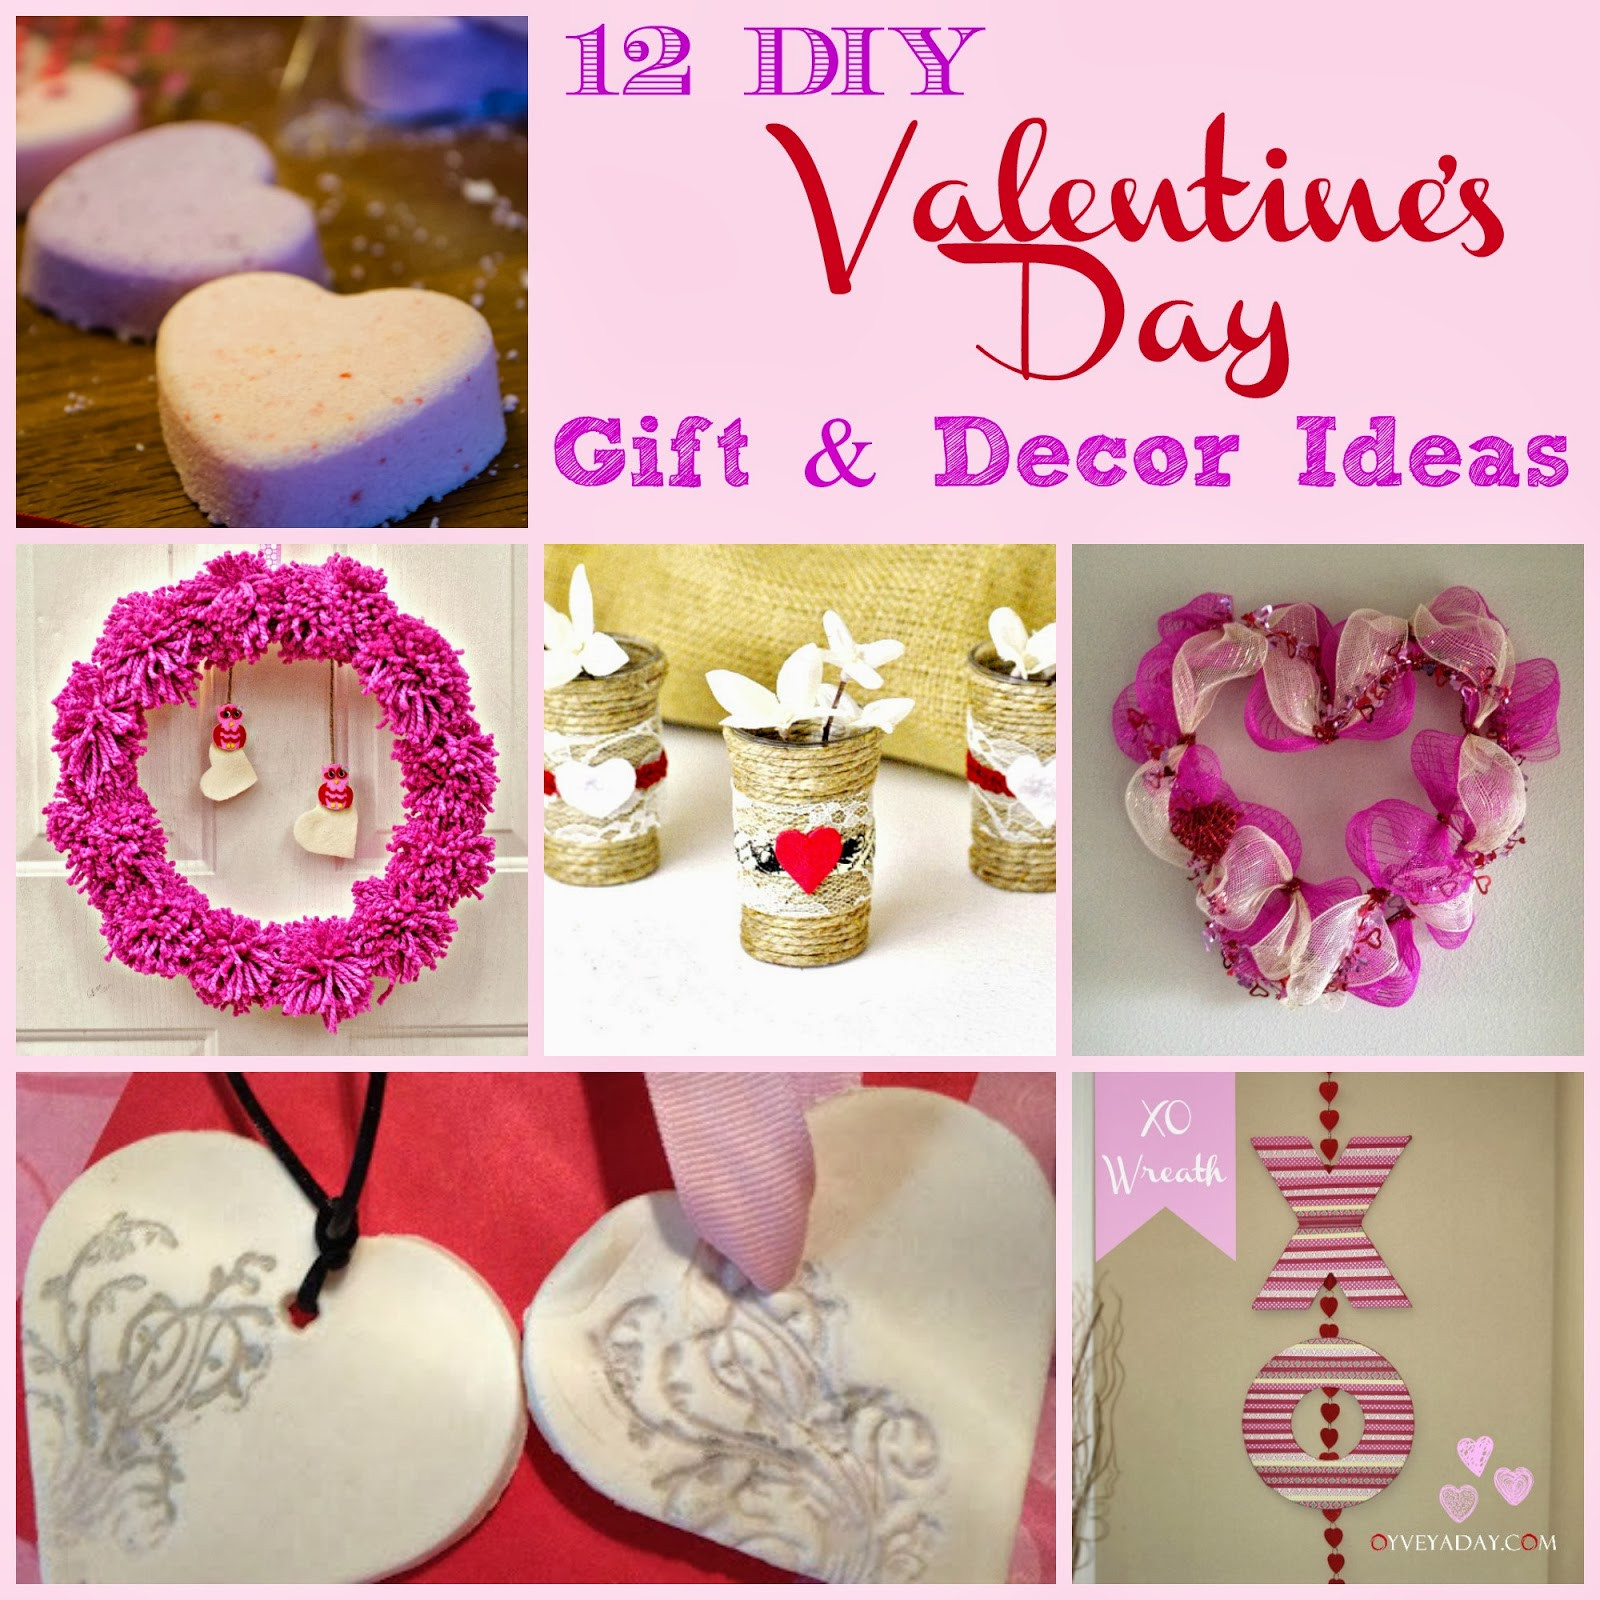 Valentine Gift Ideas Diy
 12 DIY Valentine s Day Gift & Decor Ideas Outnumbered 3 to 1